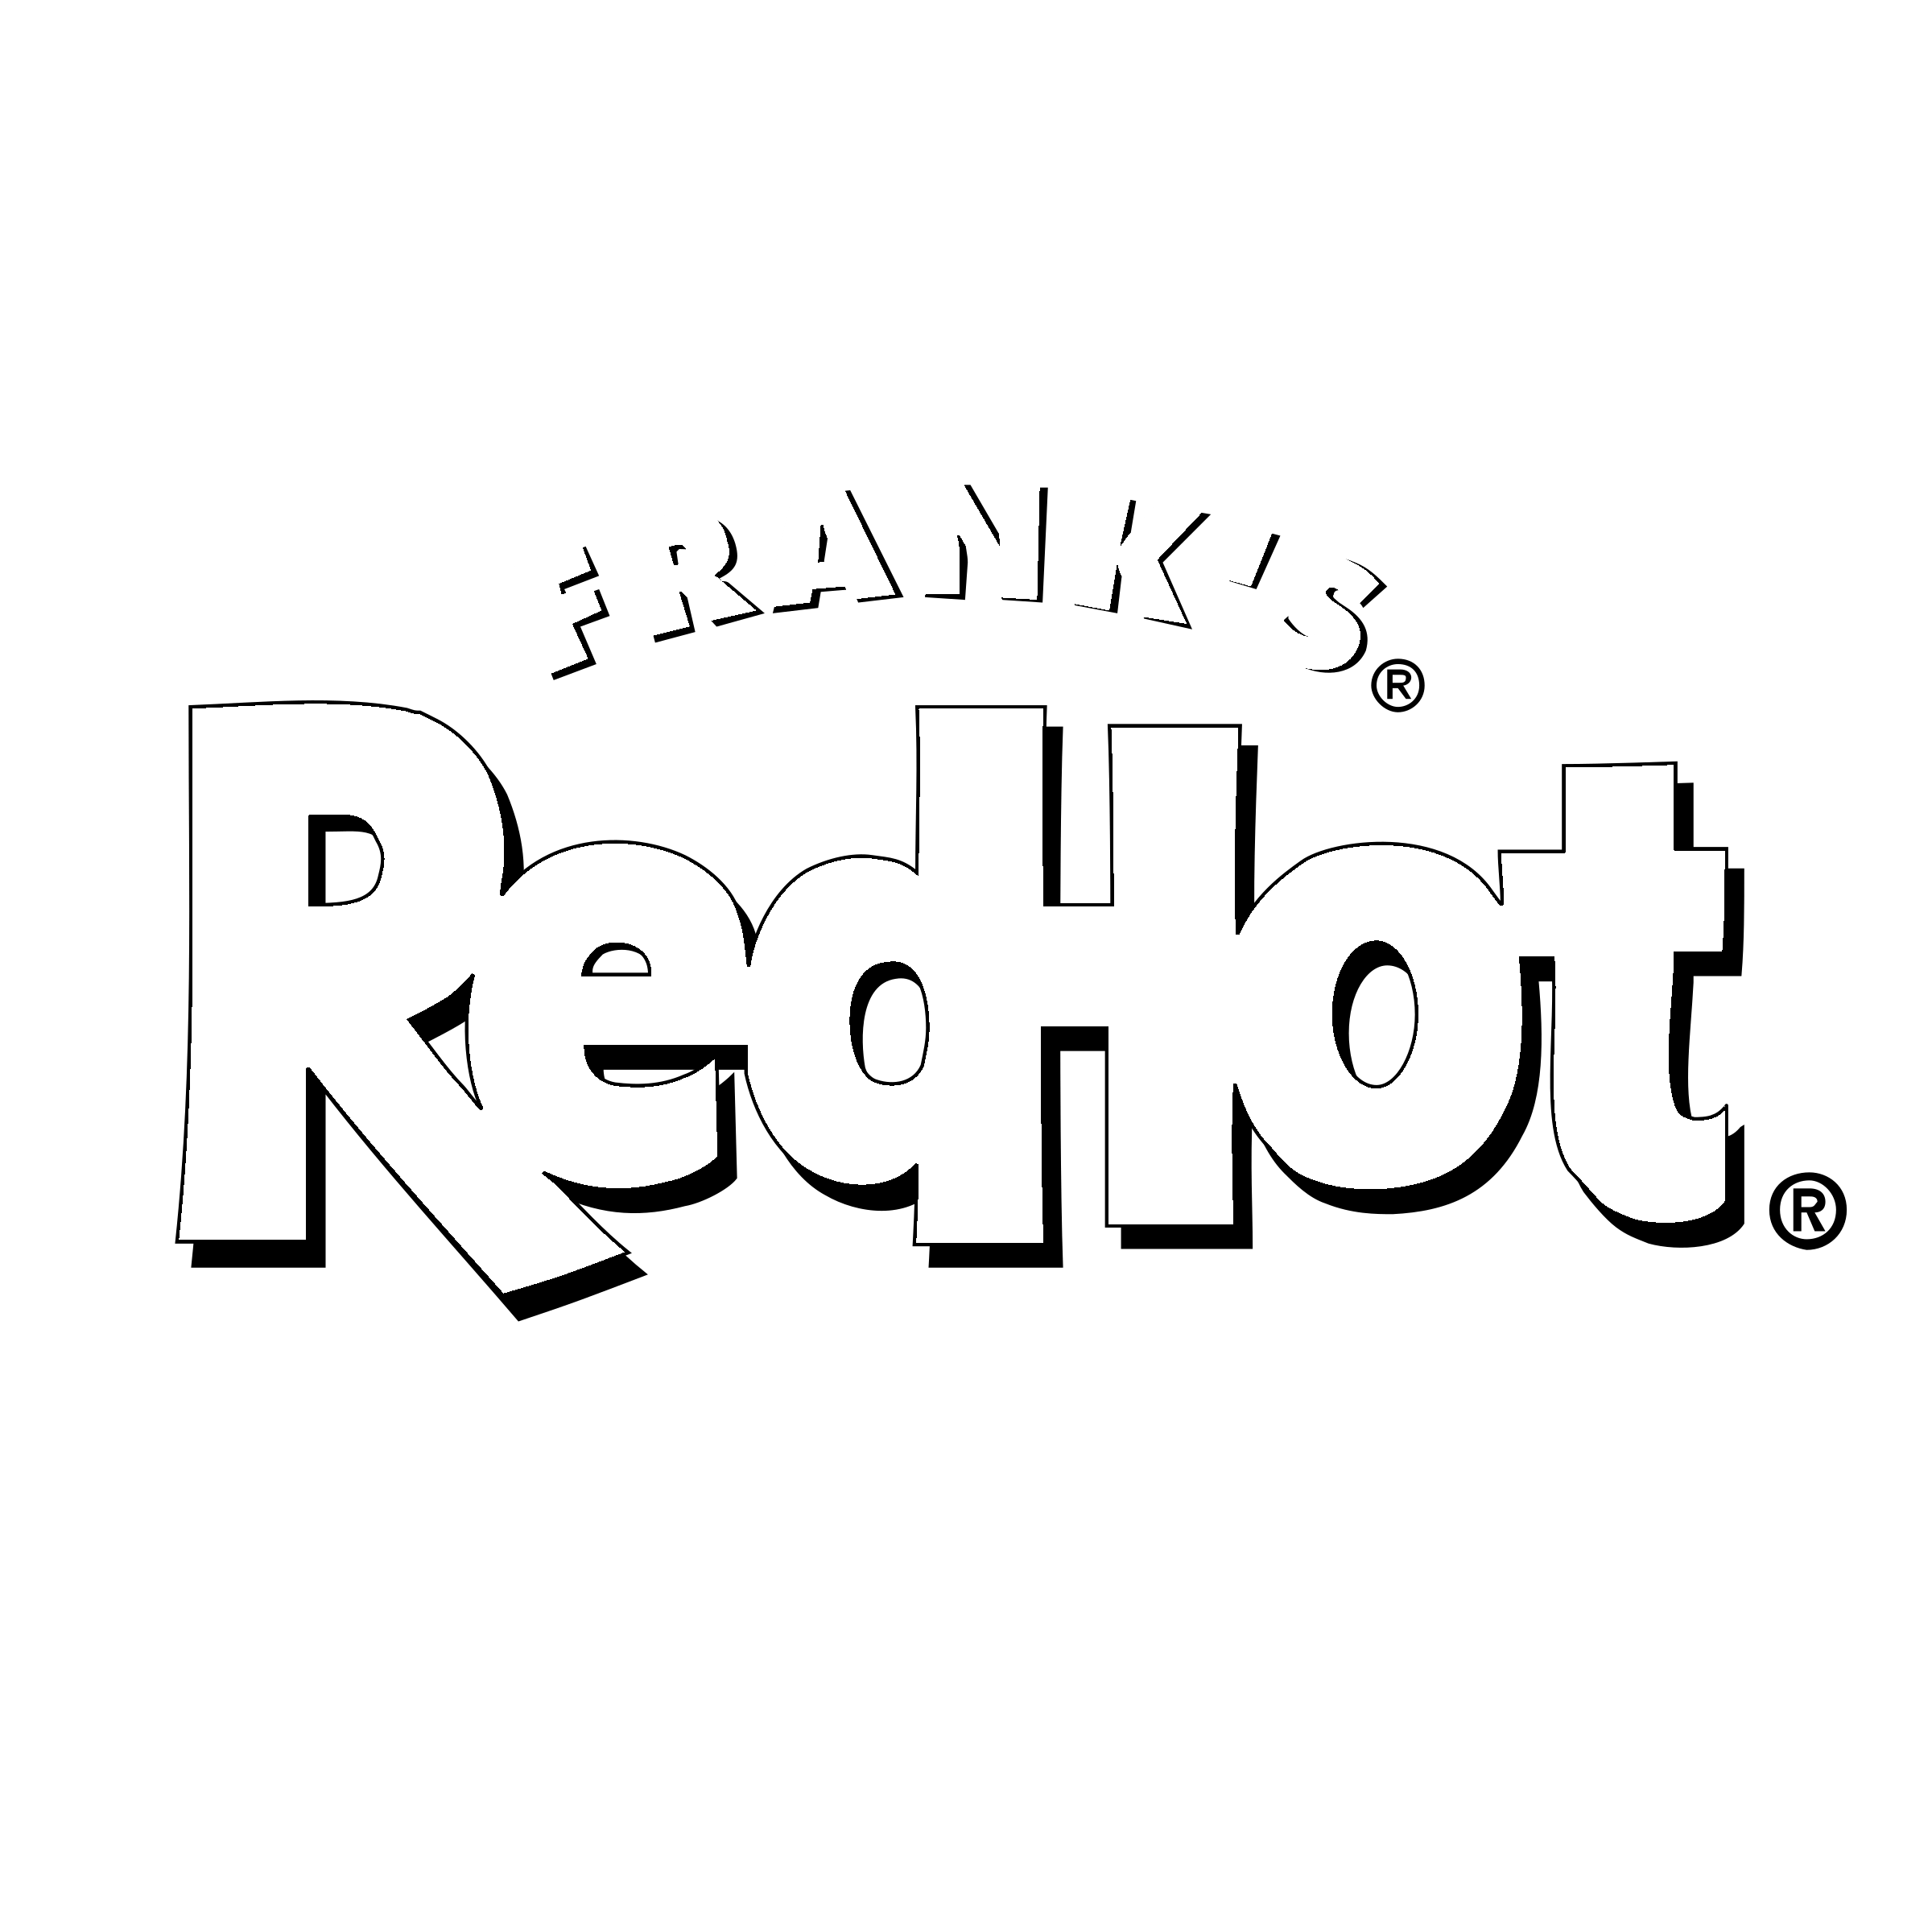 White Hot Logo - Frank's RedHot Logo PNG Transparent & SVG Vector - Freebie Supply